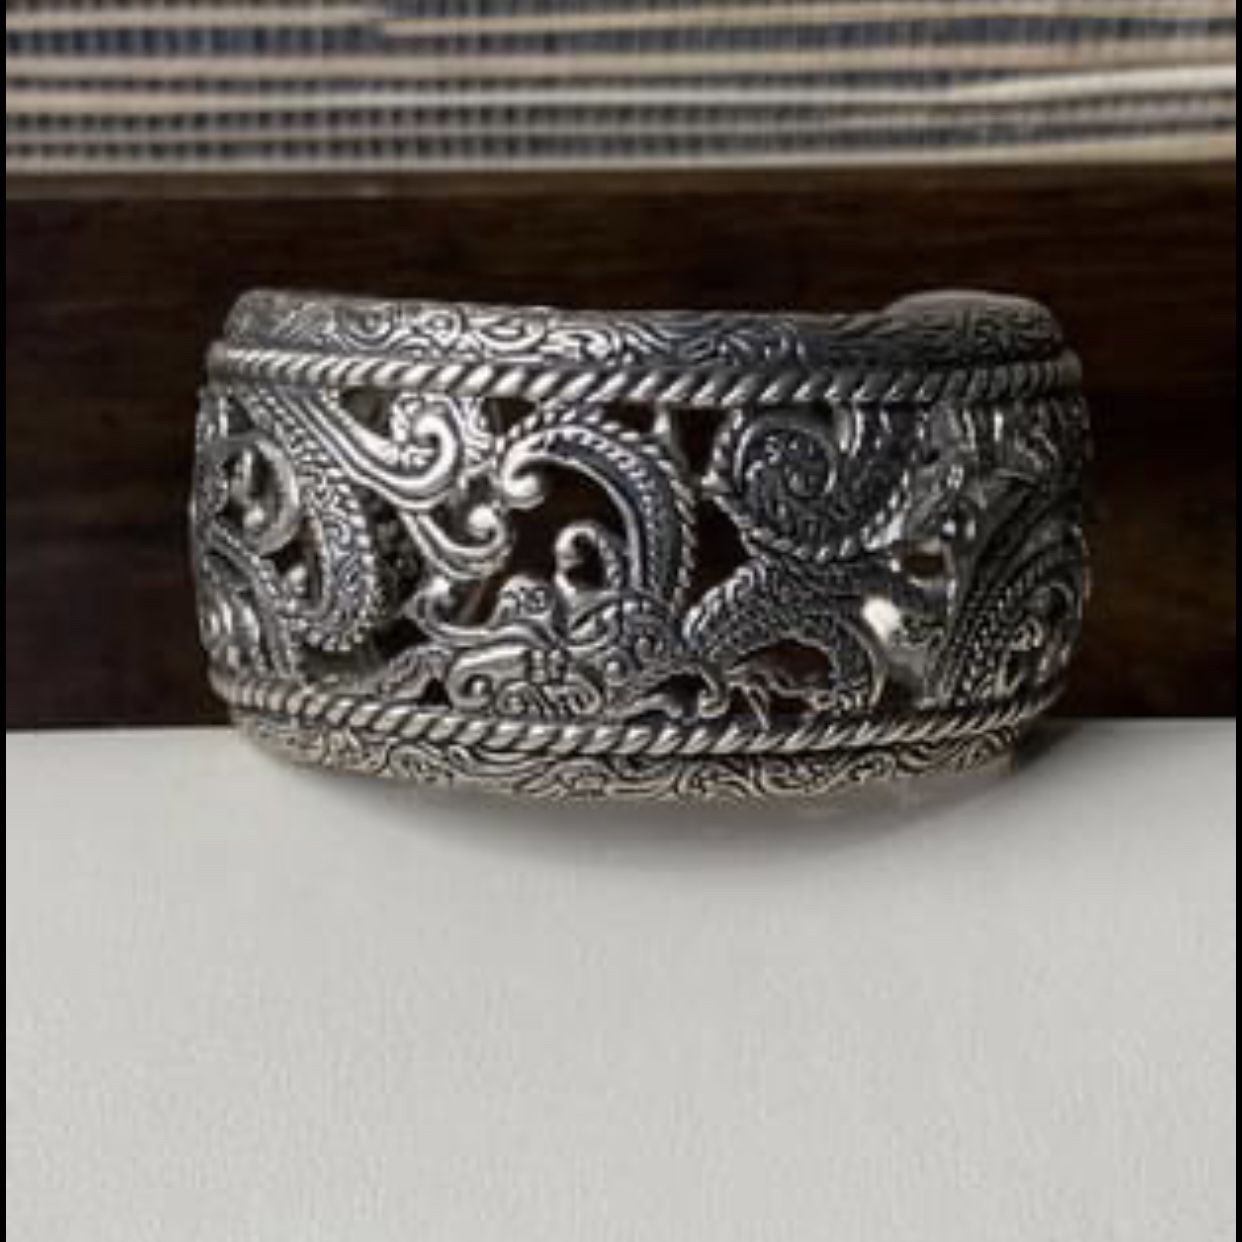 Carolyn Pollack Sterling Silver Cuff Bracelet